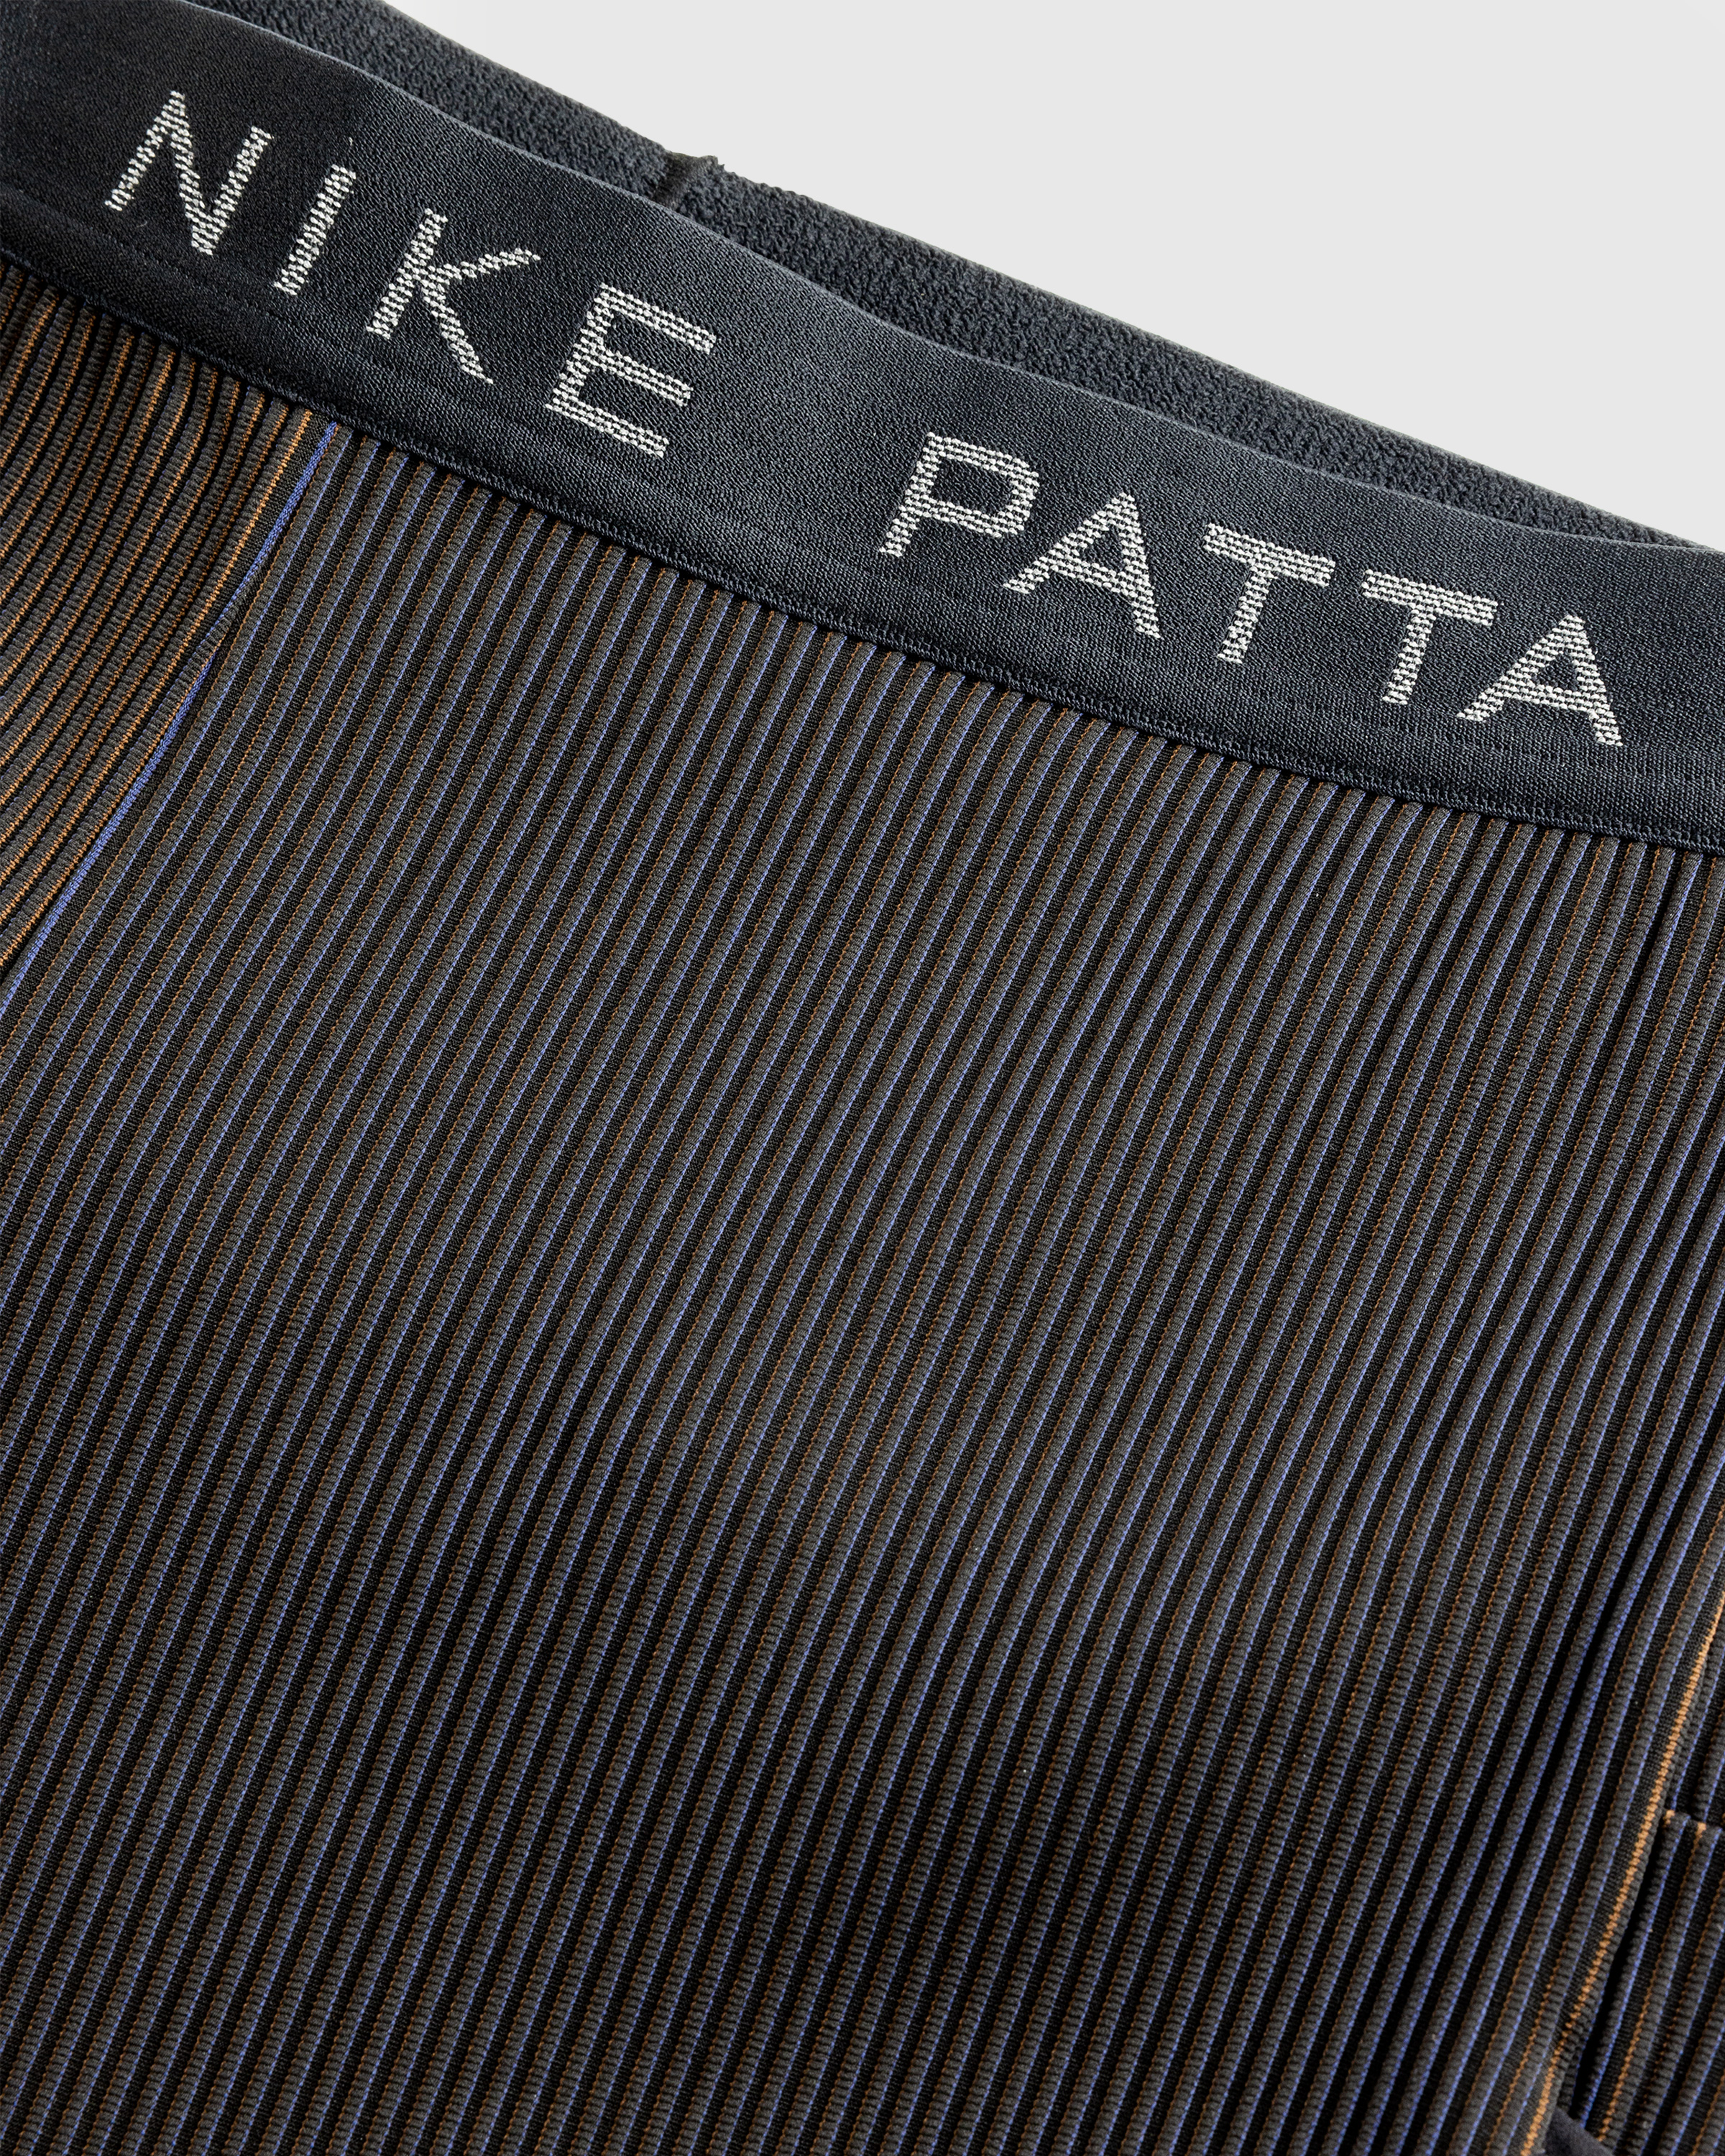 Nike x Patta – Leggings Black/Deep Royal Blue - Active Pants - Black - Image 7